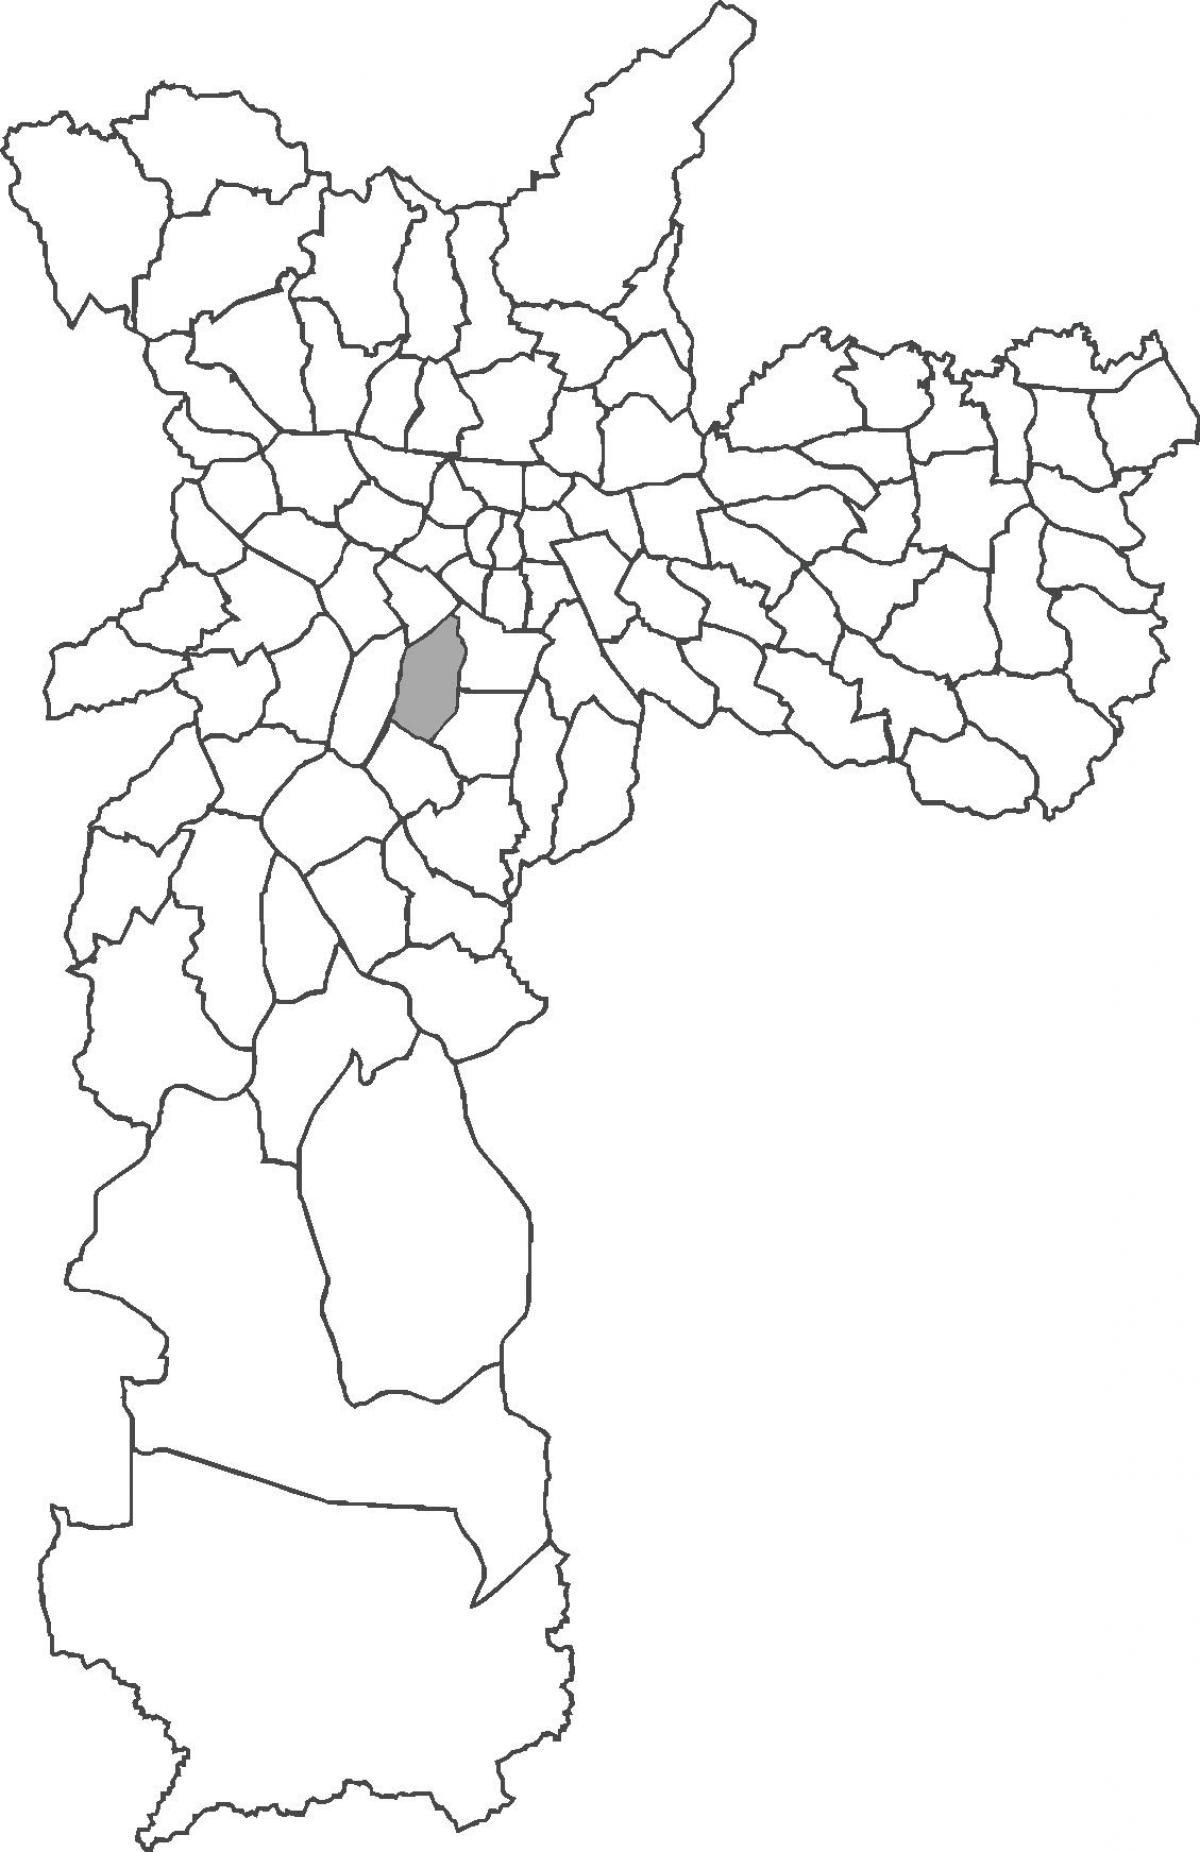 Mapa de Moema provincia